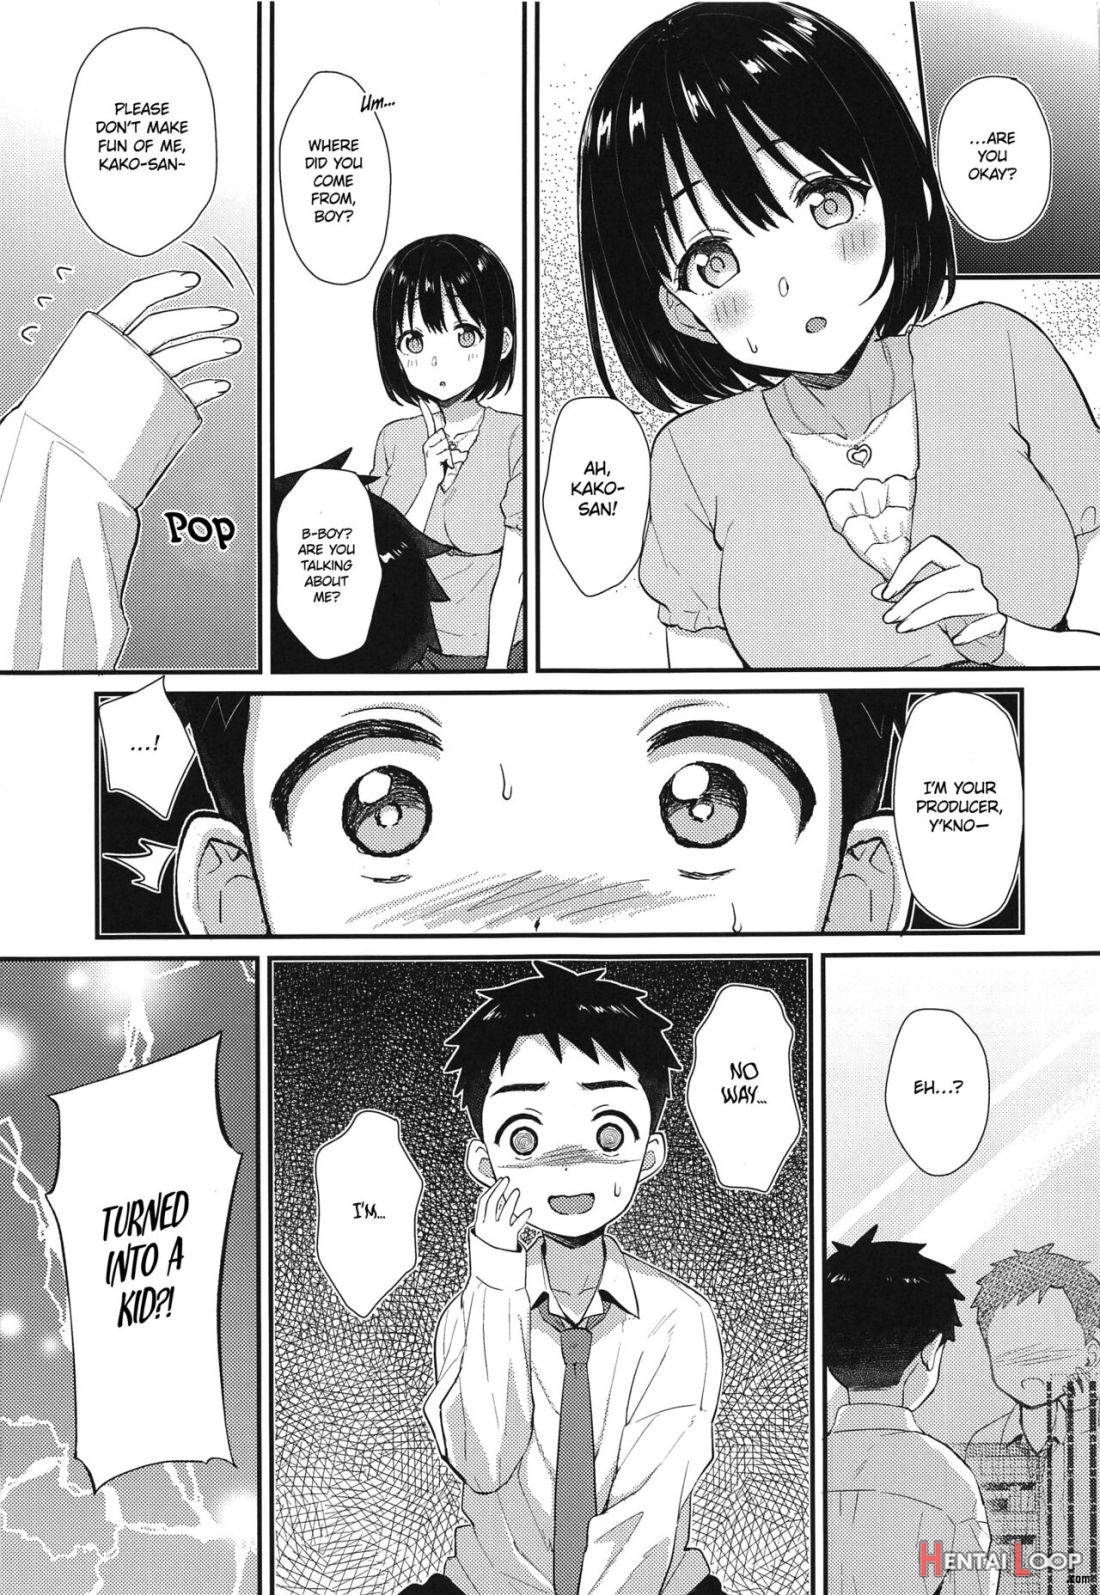 Kako-san to Shota P page 4